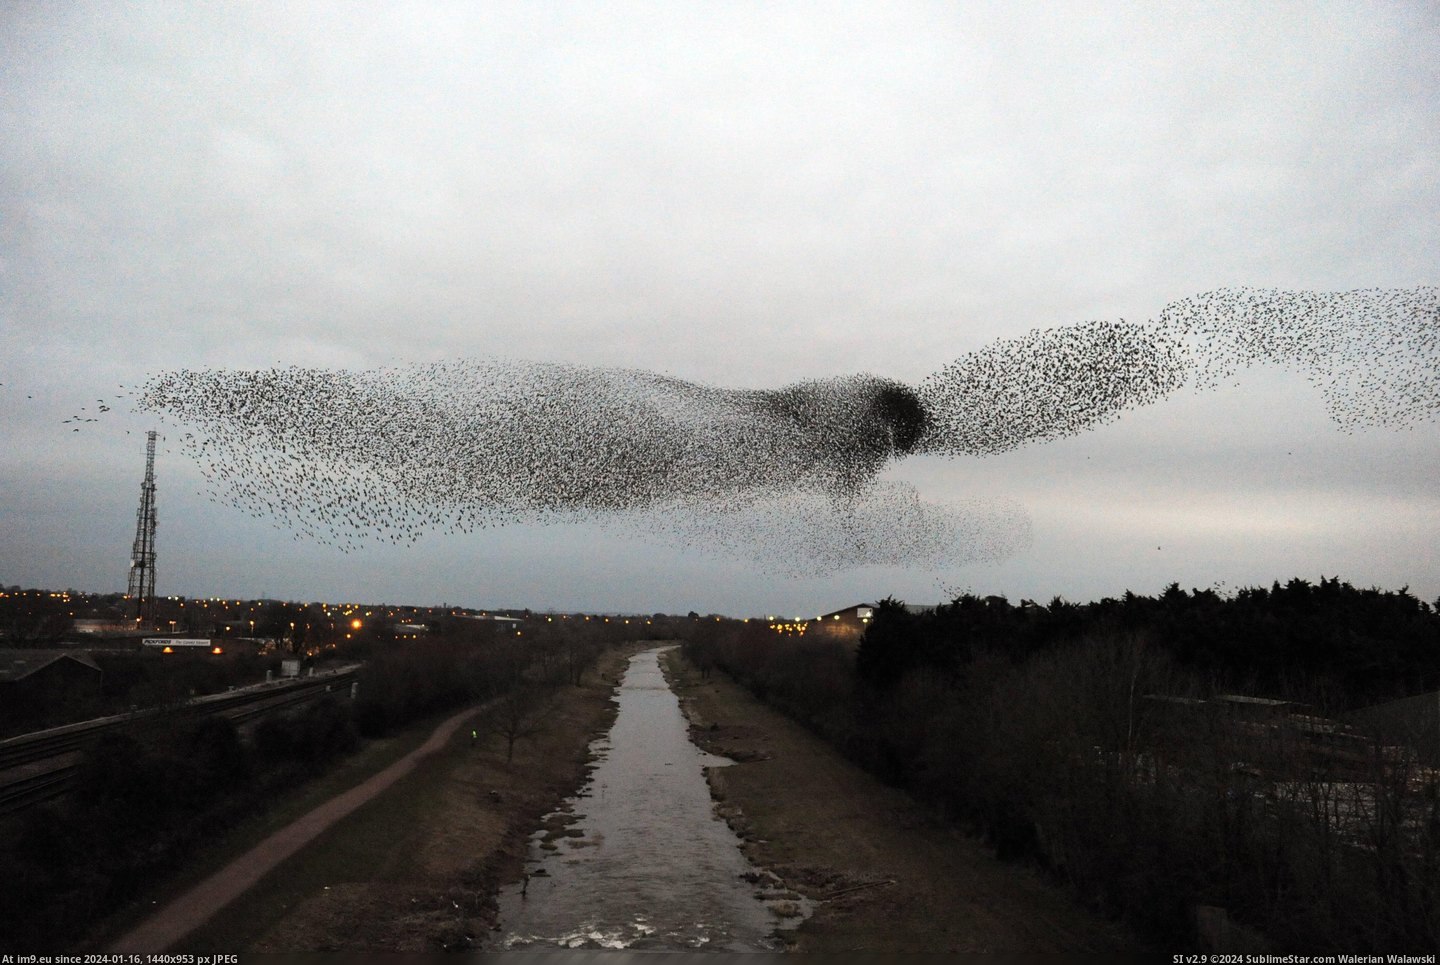 #Huge #England #Shape #Starlings #Taunton #Form #Hawk #Flock [Pics] A huge flock of starlings form the shape of a hawk in Taunton, England Pic. (Изображение из альбом My r/PICS favs))